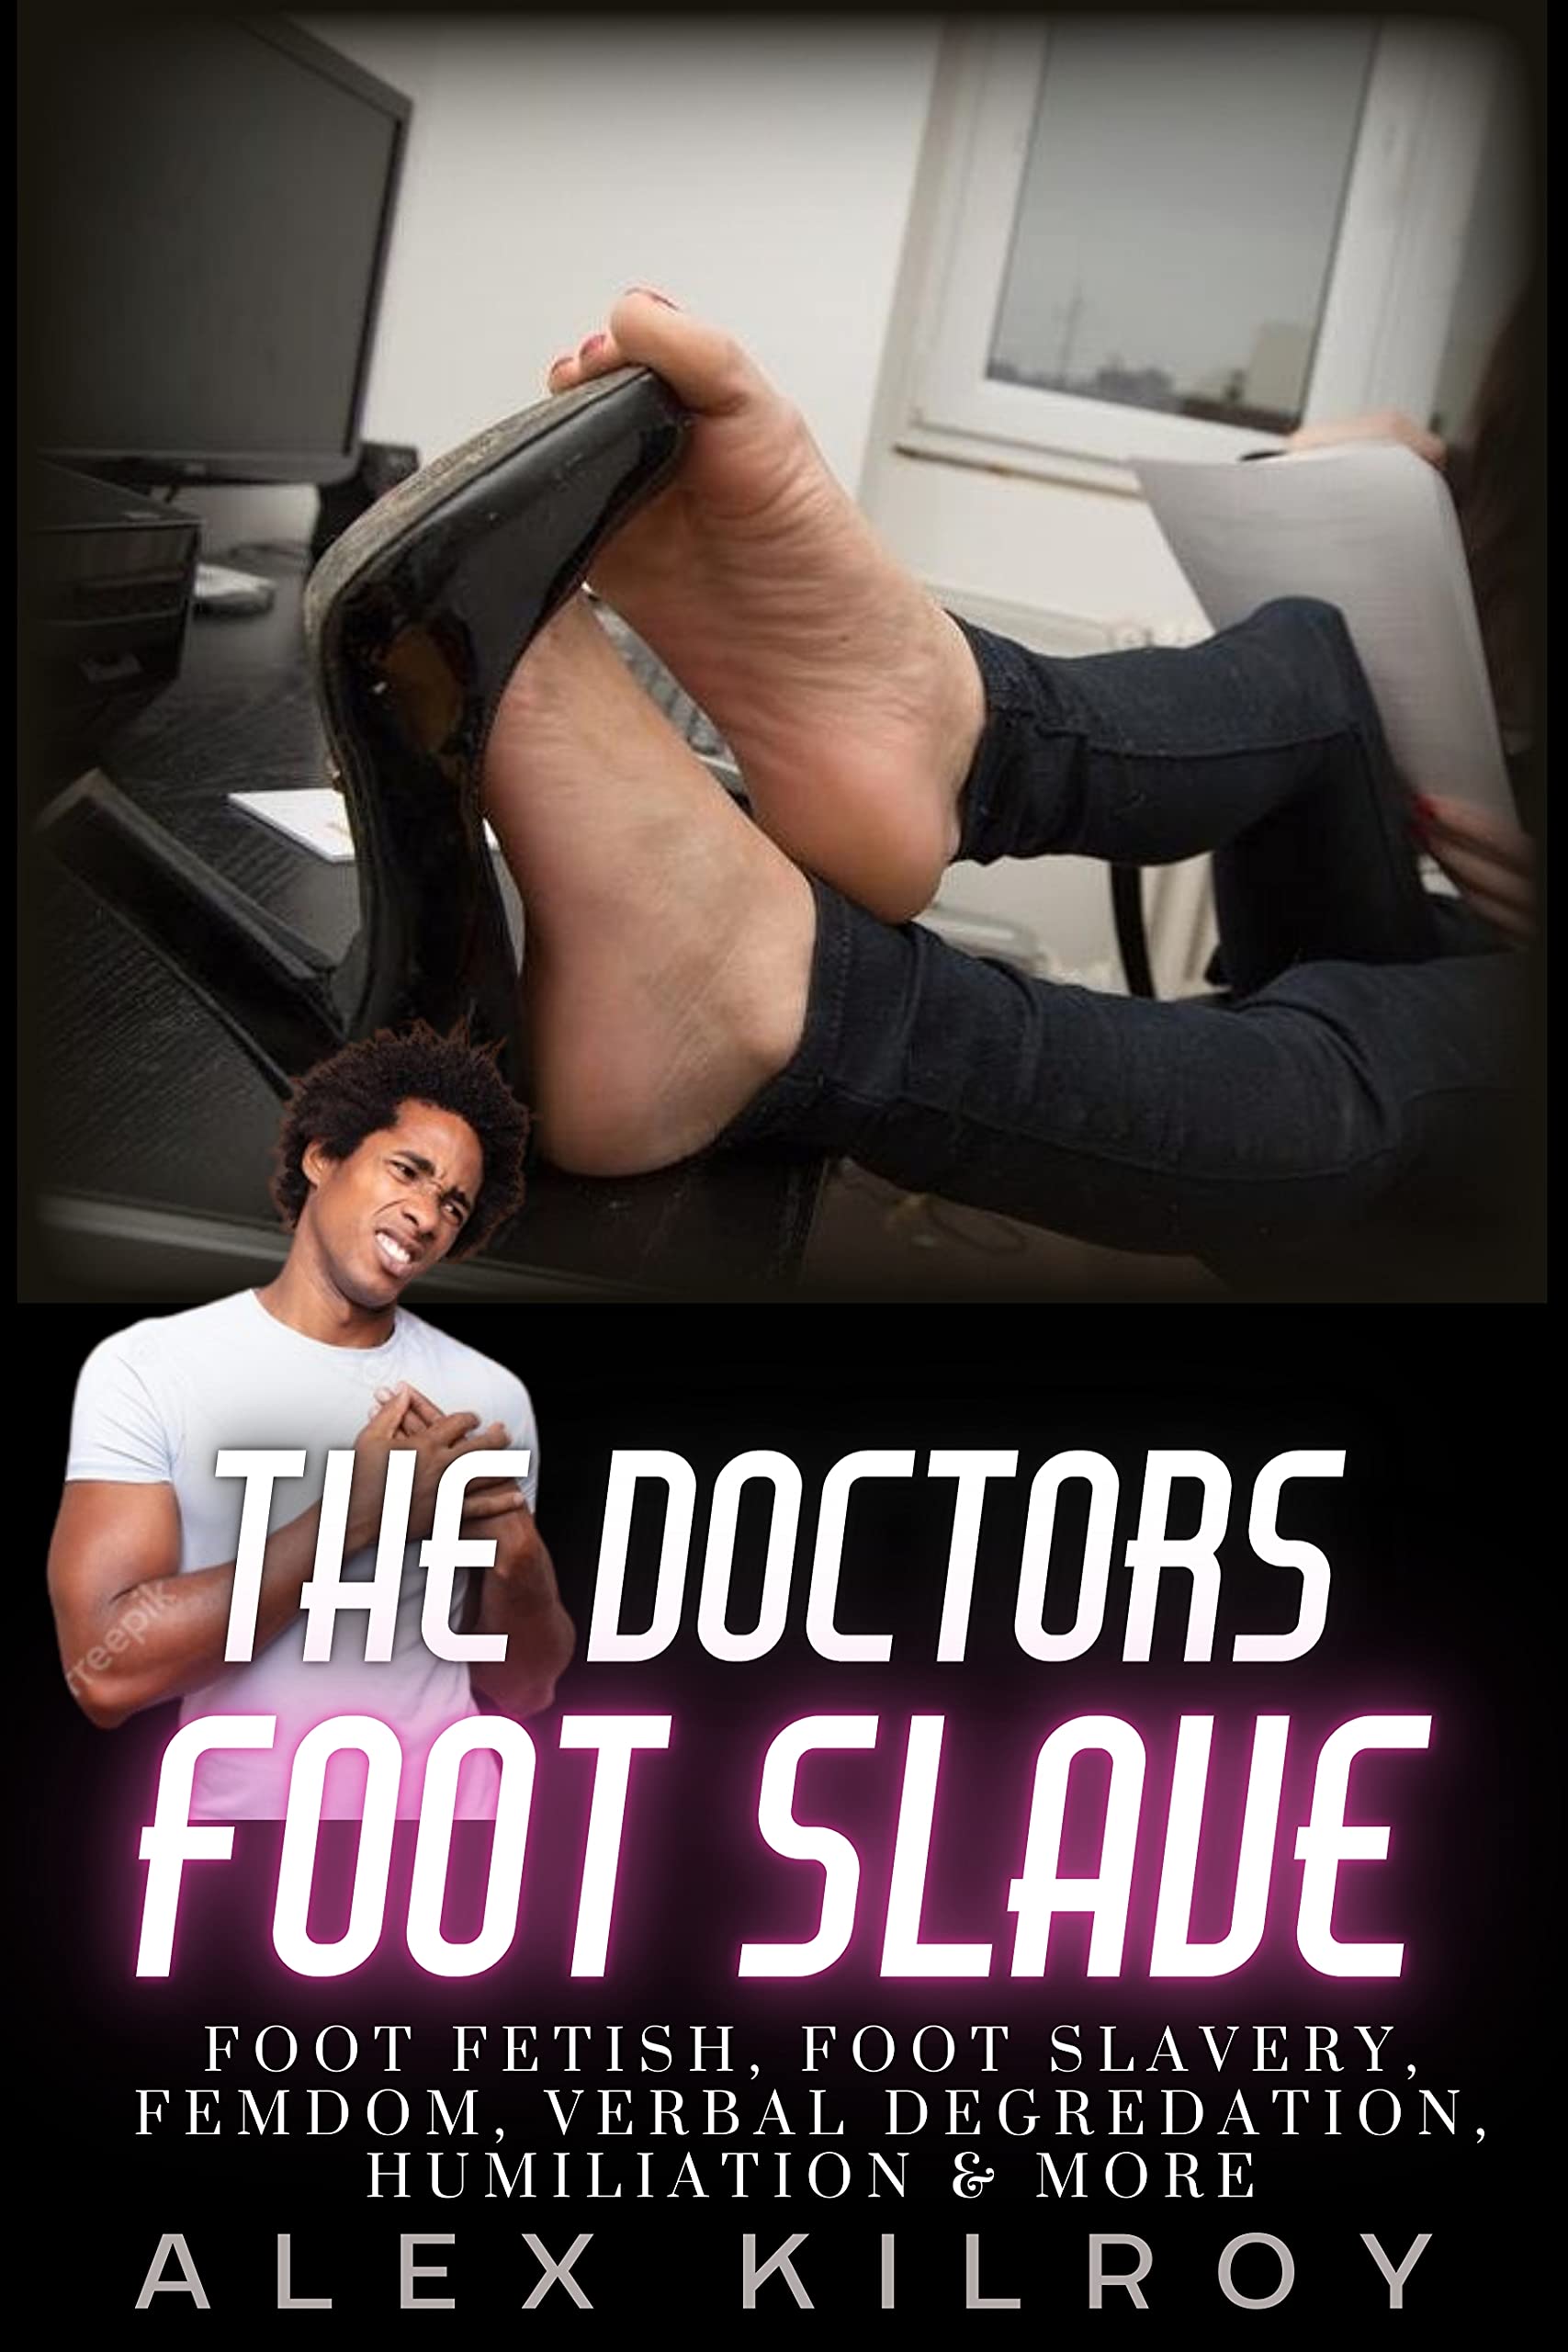 ana vic share foot slave stories photos